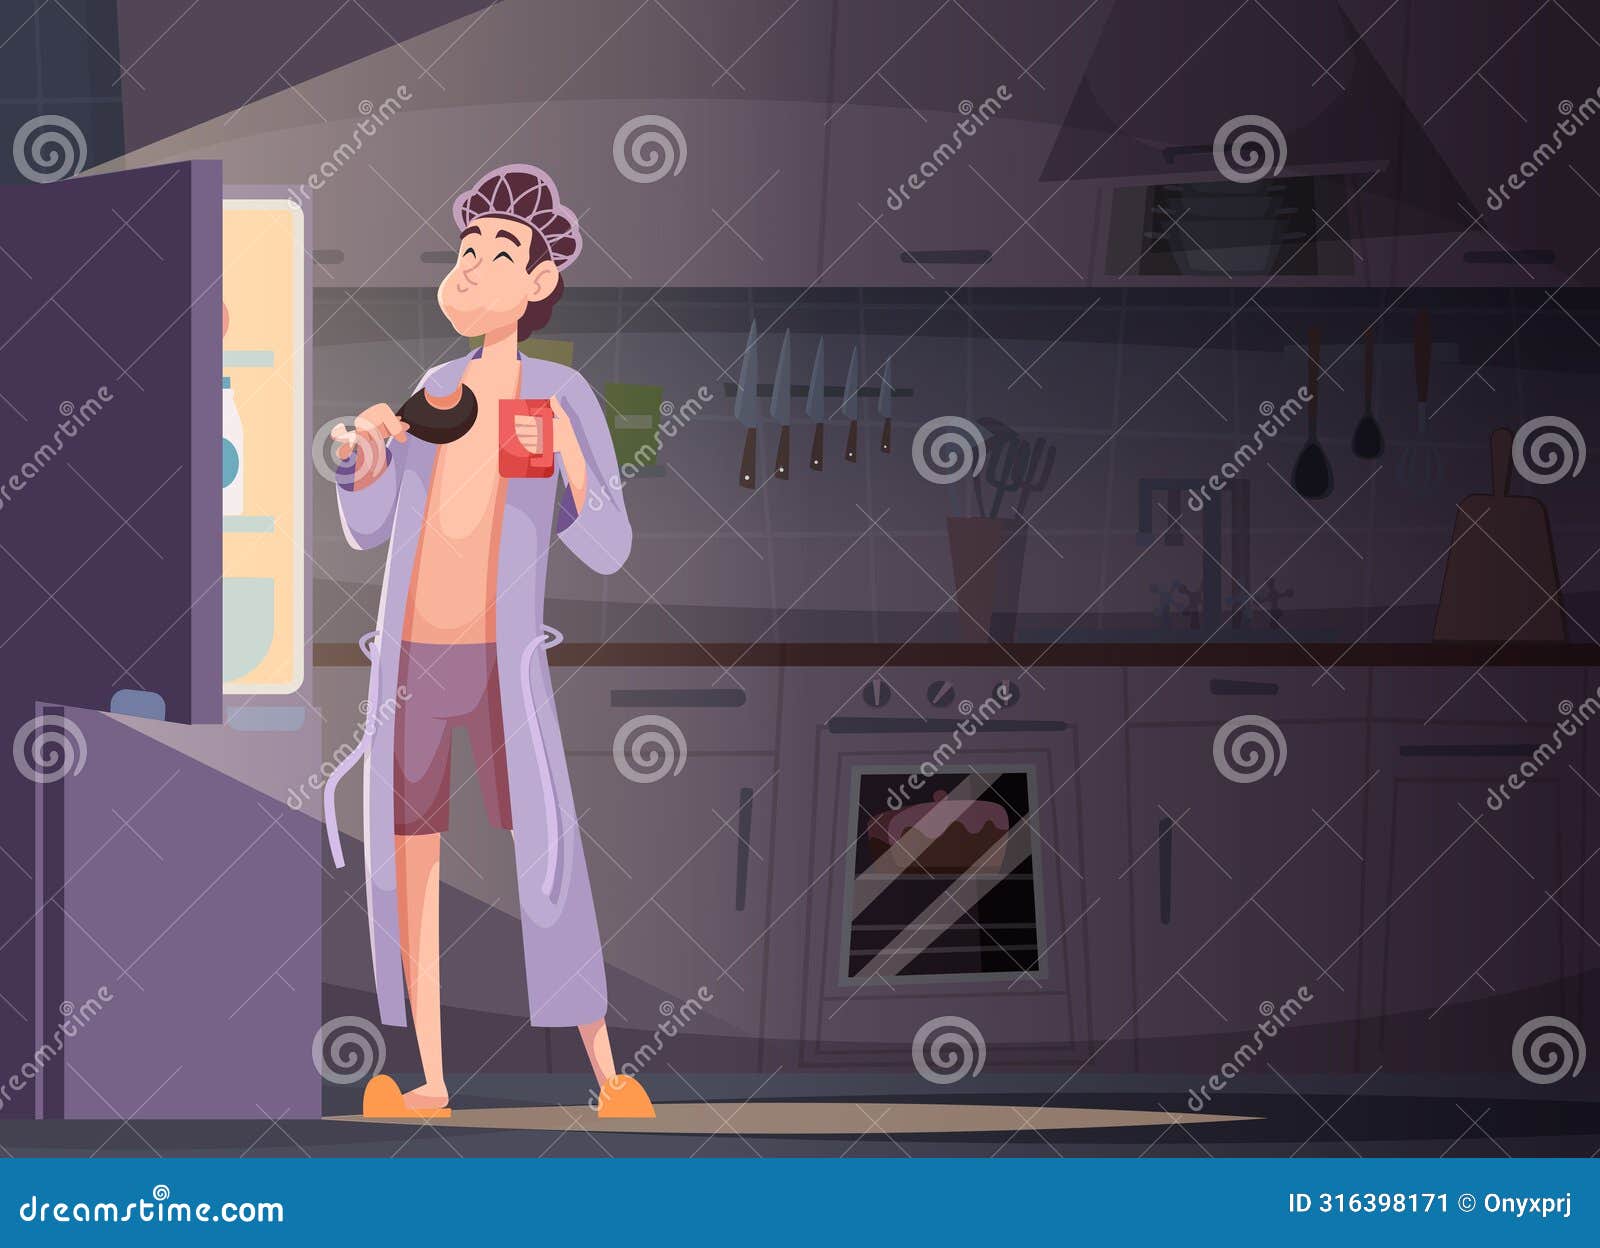 fridge snacking. cartoon background people with bad habits gluttony exact  concept 